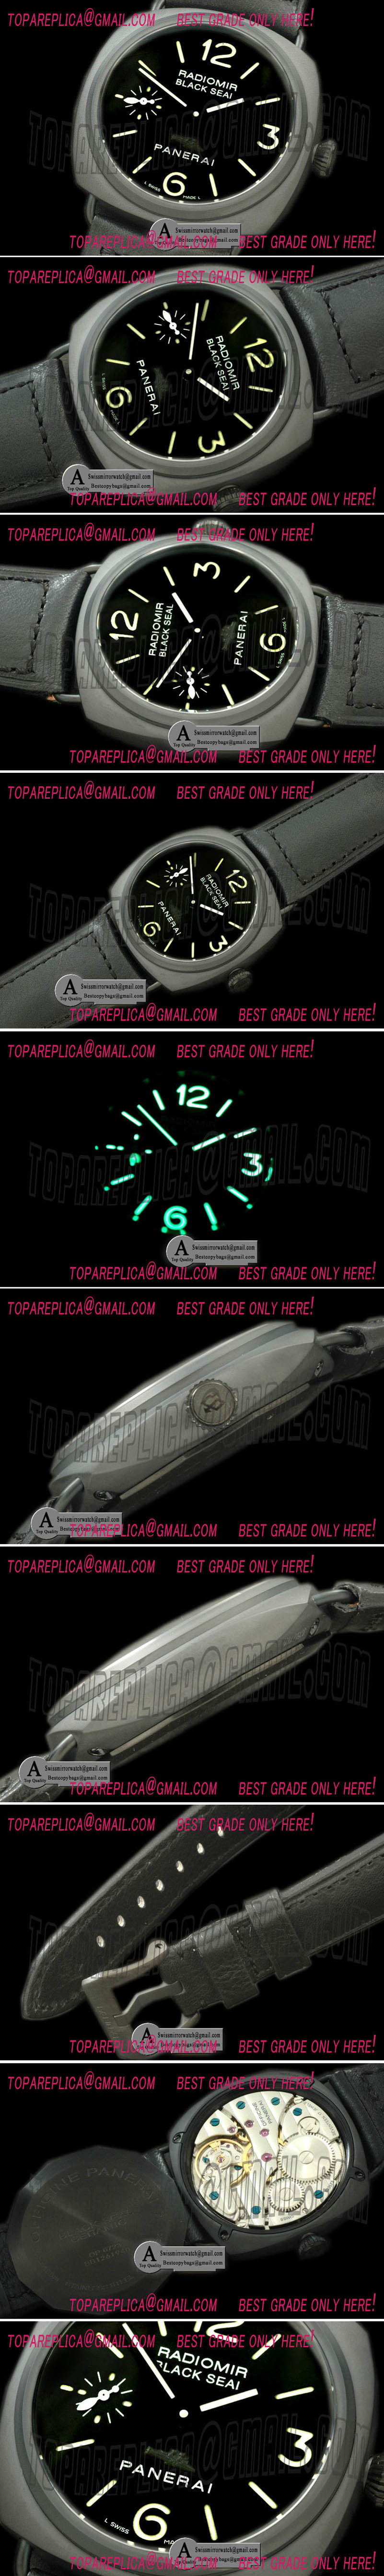 Panerai RADIOMIR 45MM Pam 292J Black Seal Ceramic Leather Black Asian 6497 Replica Watches